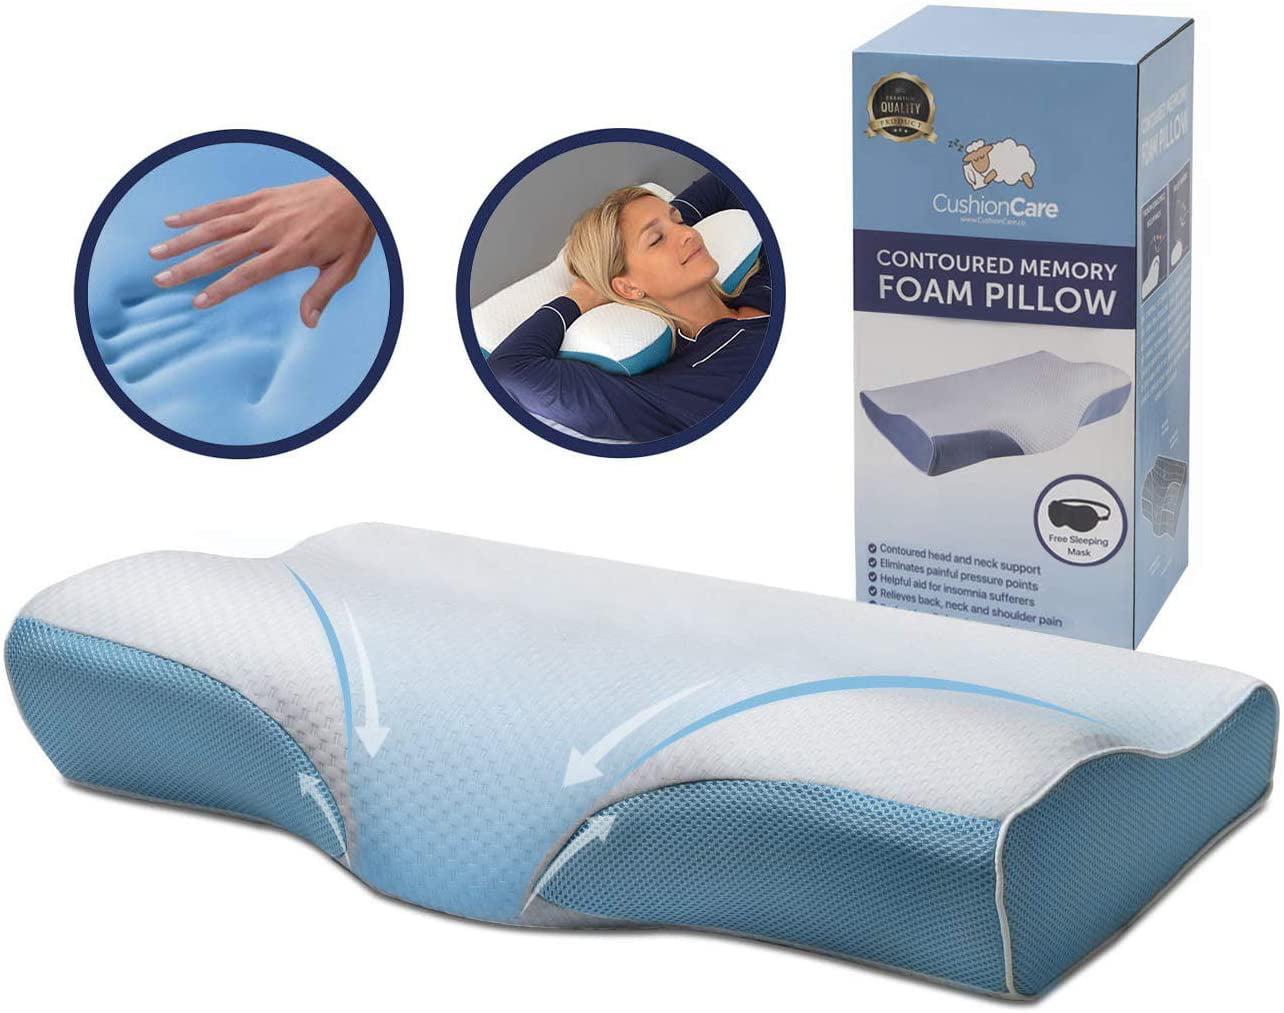 Orthopedic Pillows